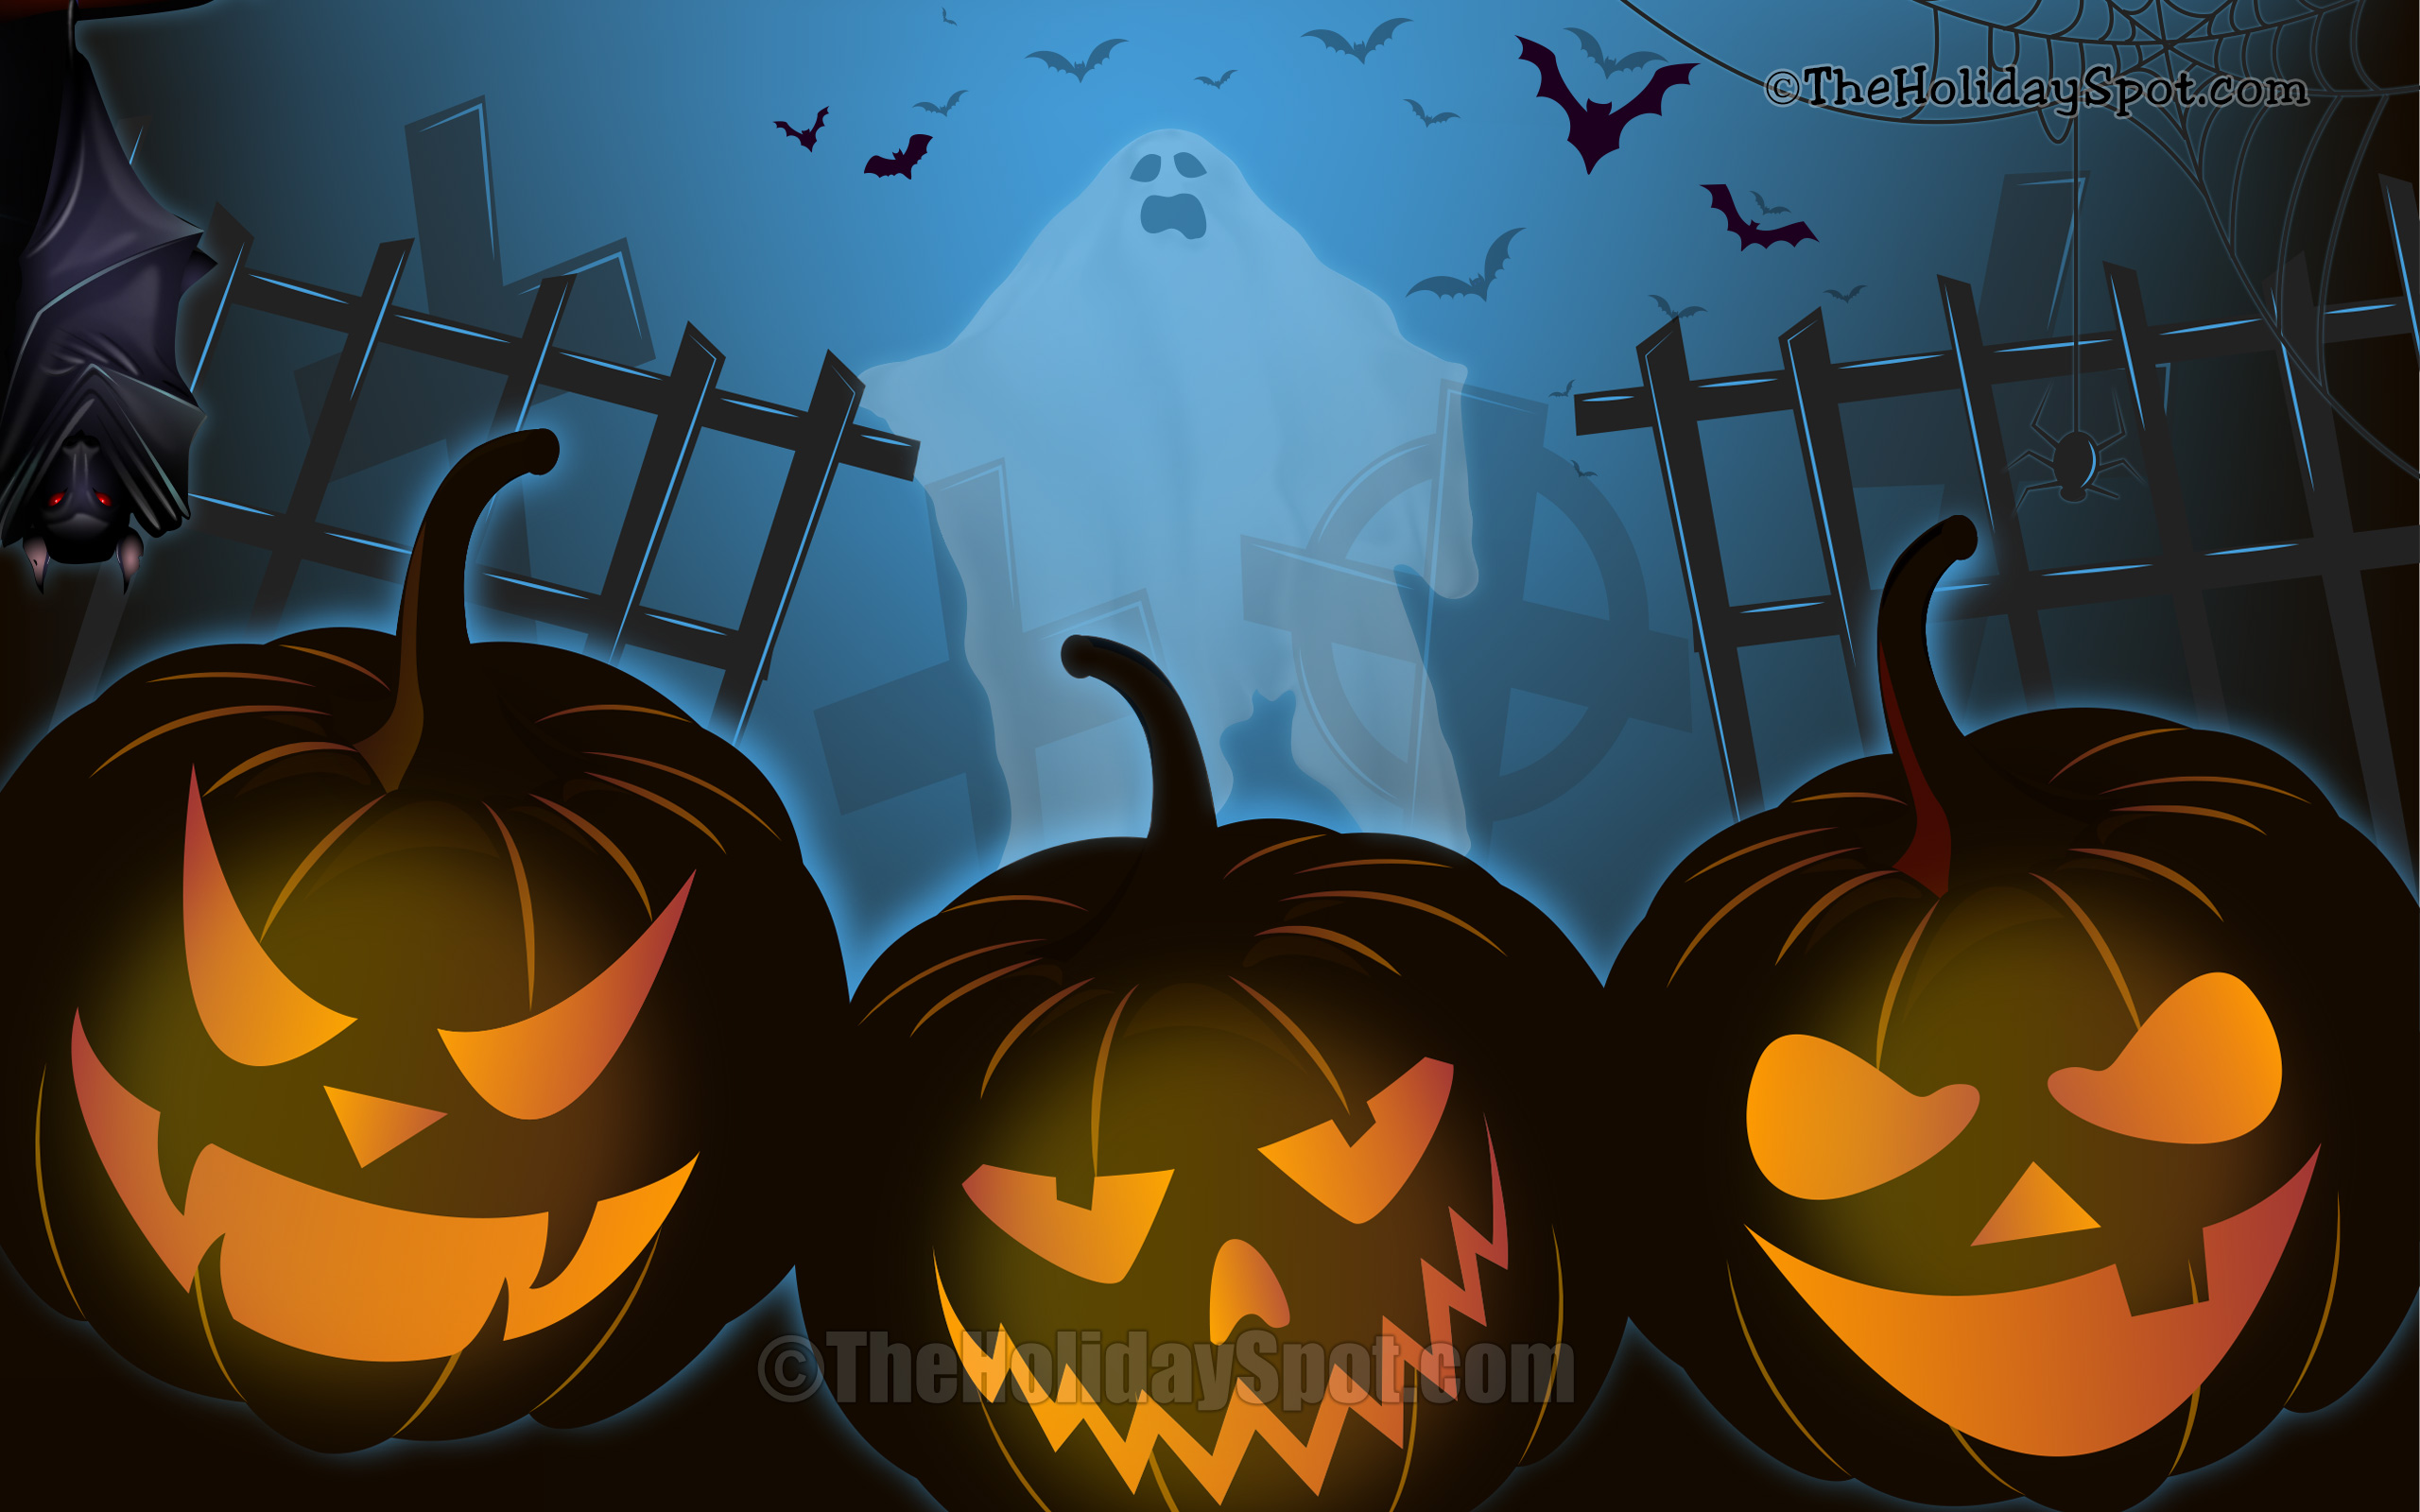 46317 Halloween Theme Background Images Stock Photos  Vectors   Shutterstock